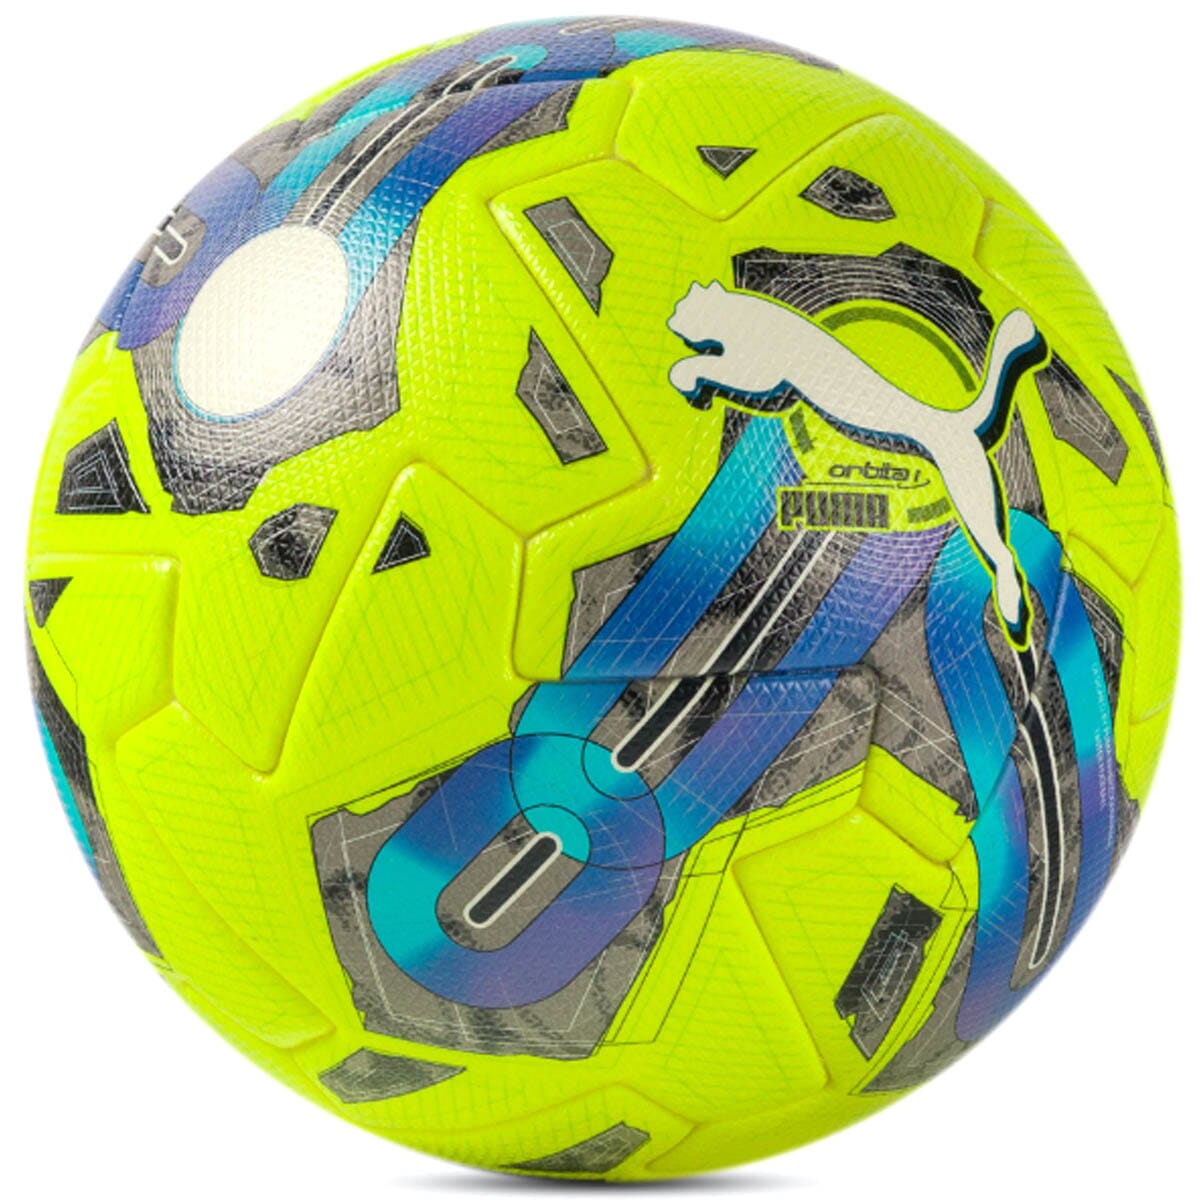 Puma Orbita 1 TB Fifa Quality Pro Ball | 08377402 Soccer Ball Puma 